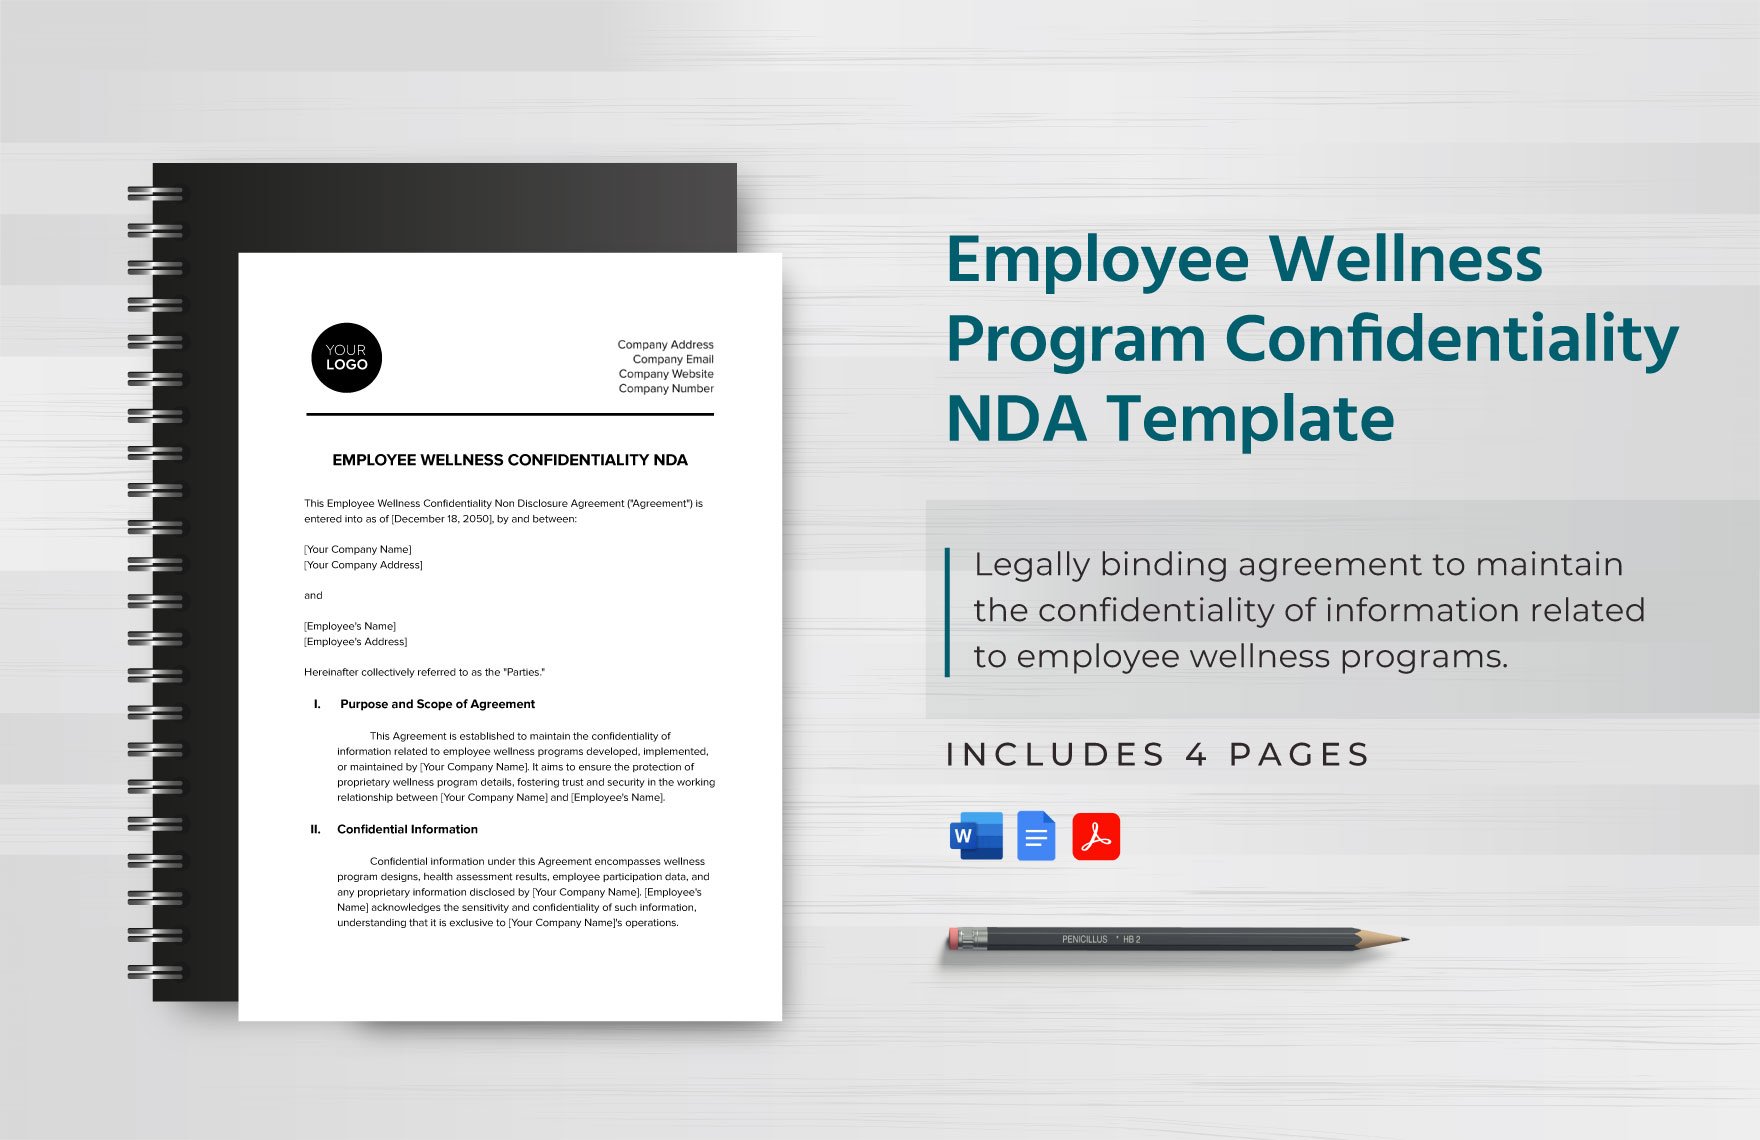 Employee Wellness Program Confidentiality NDA Template